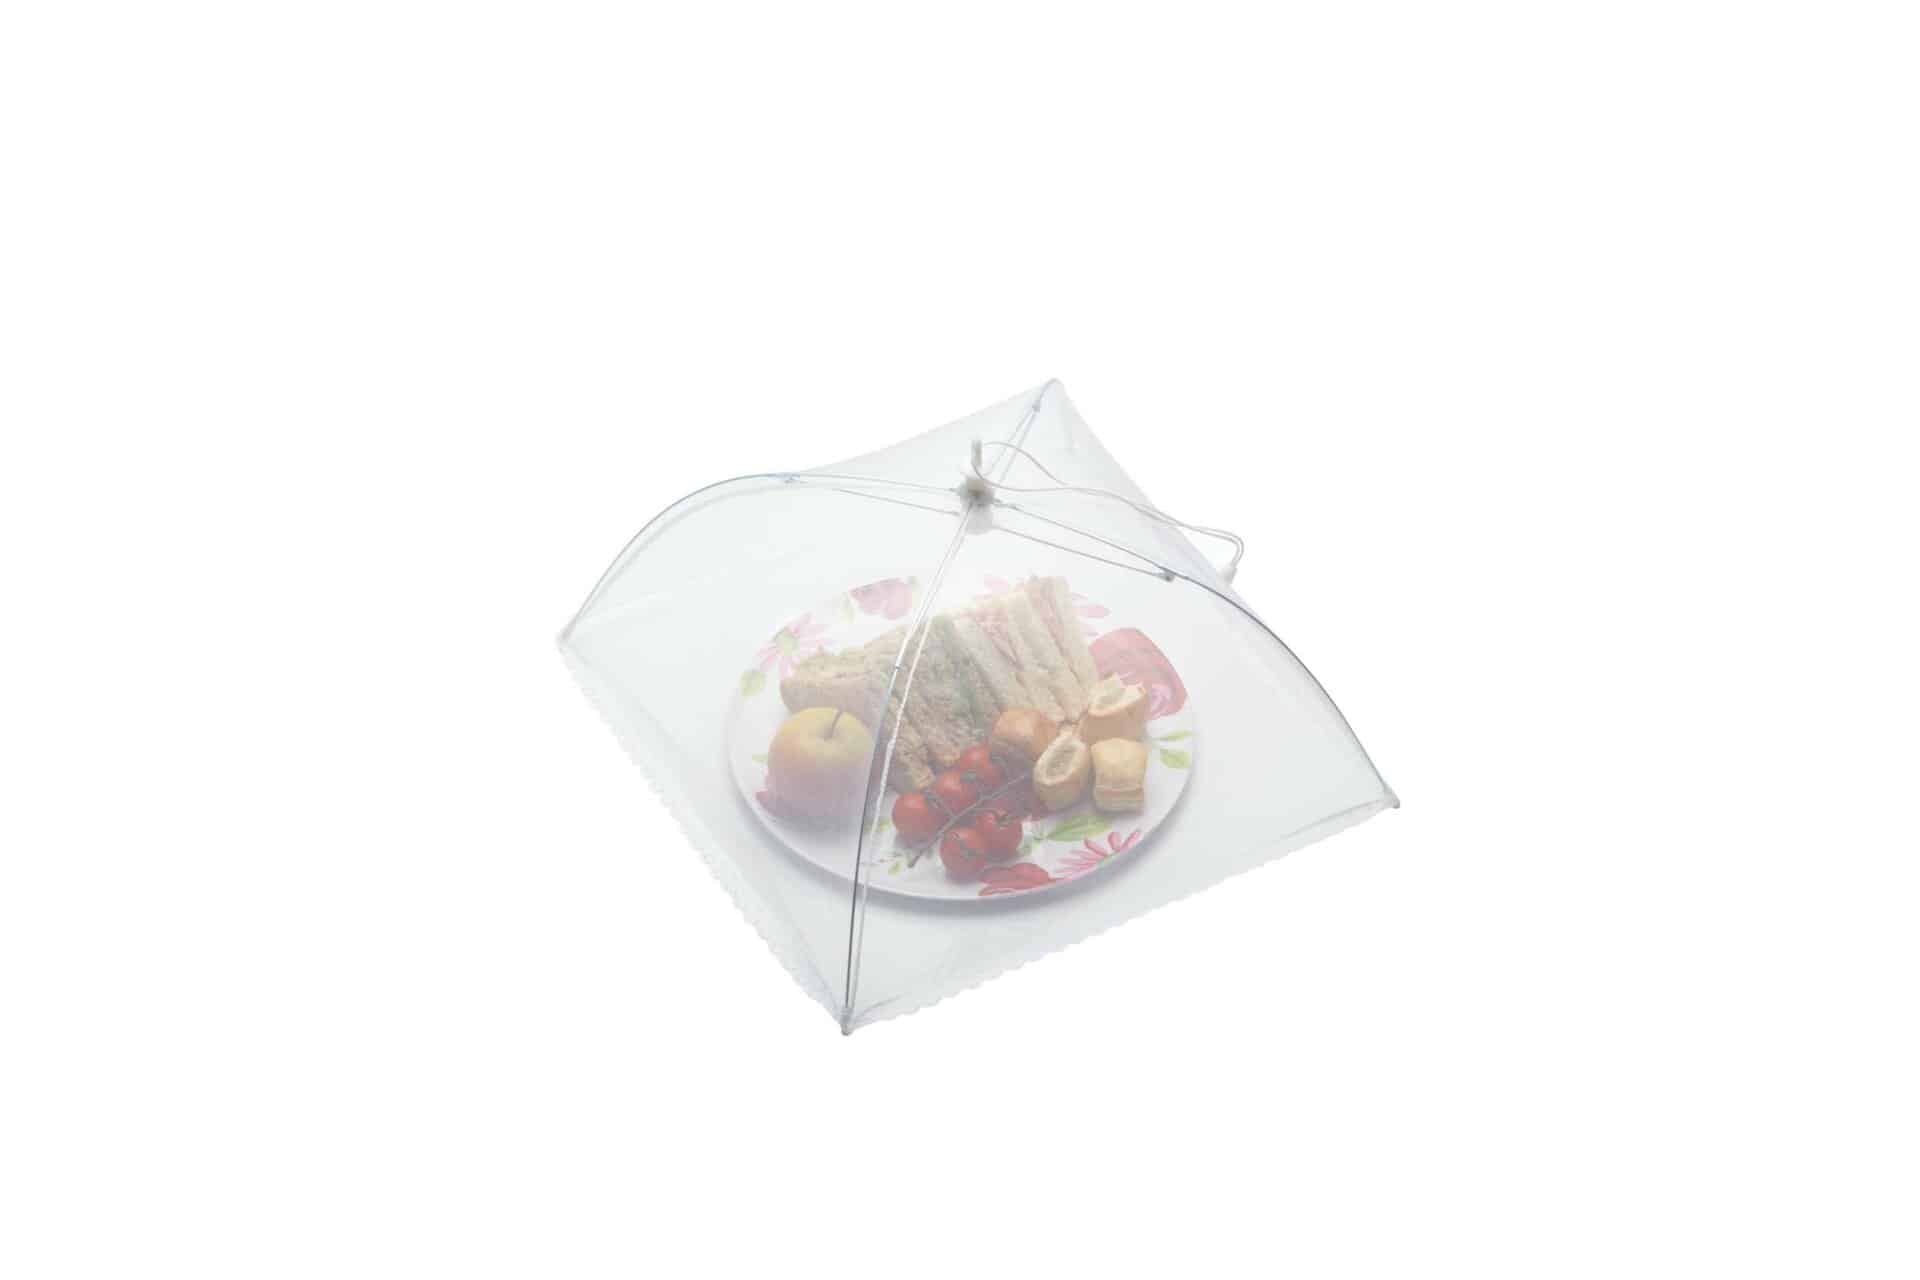 Food cover umbrella 30cm Kitchencraft